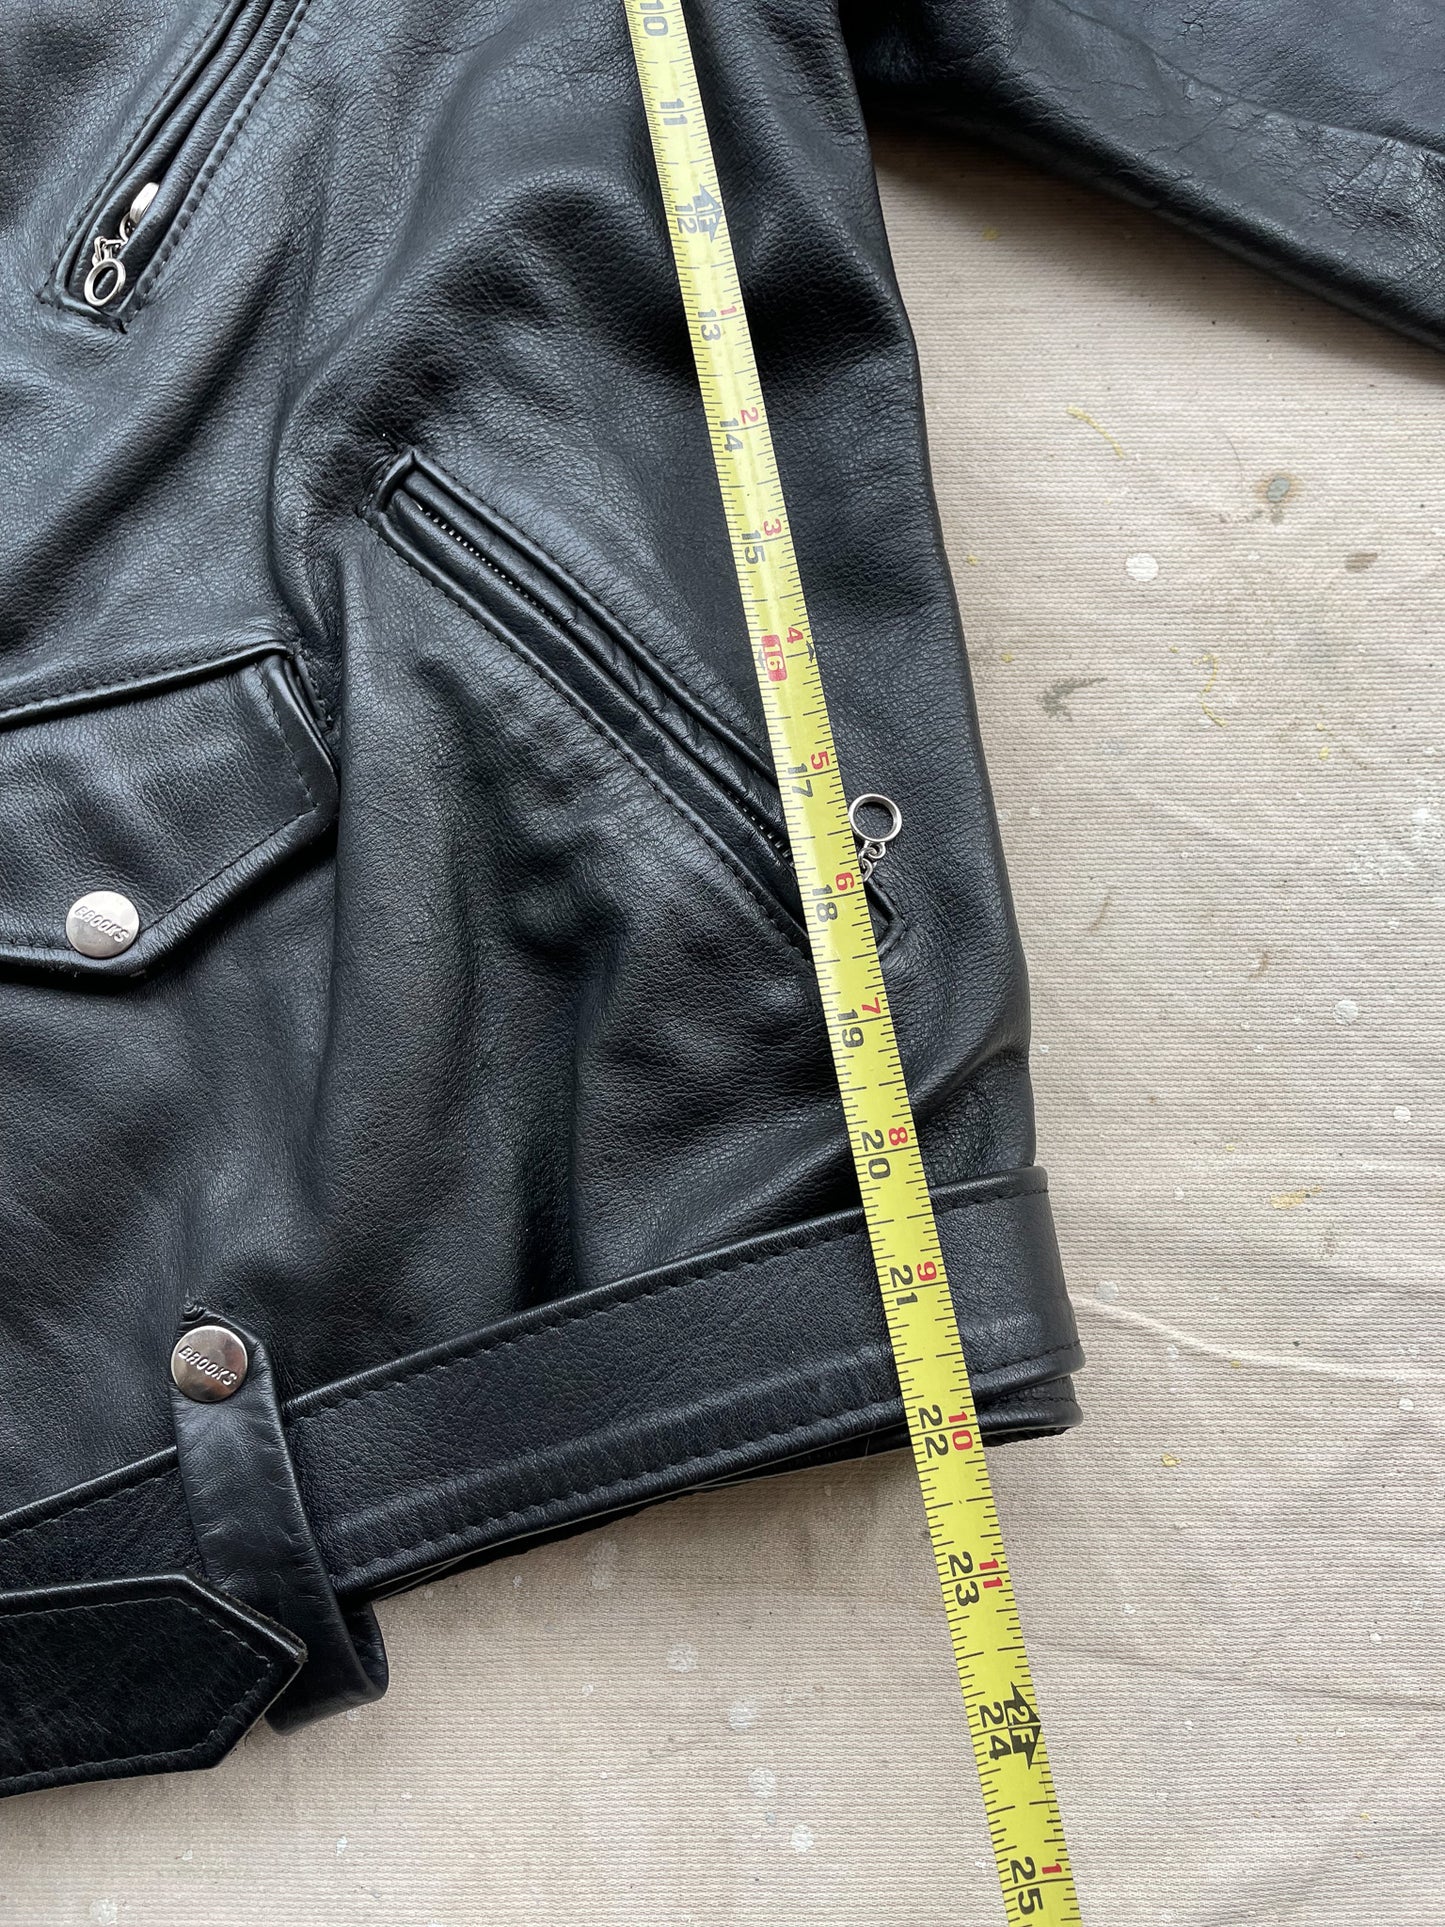 Genuine Leather Motorcycle Jacket—[L]